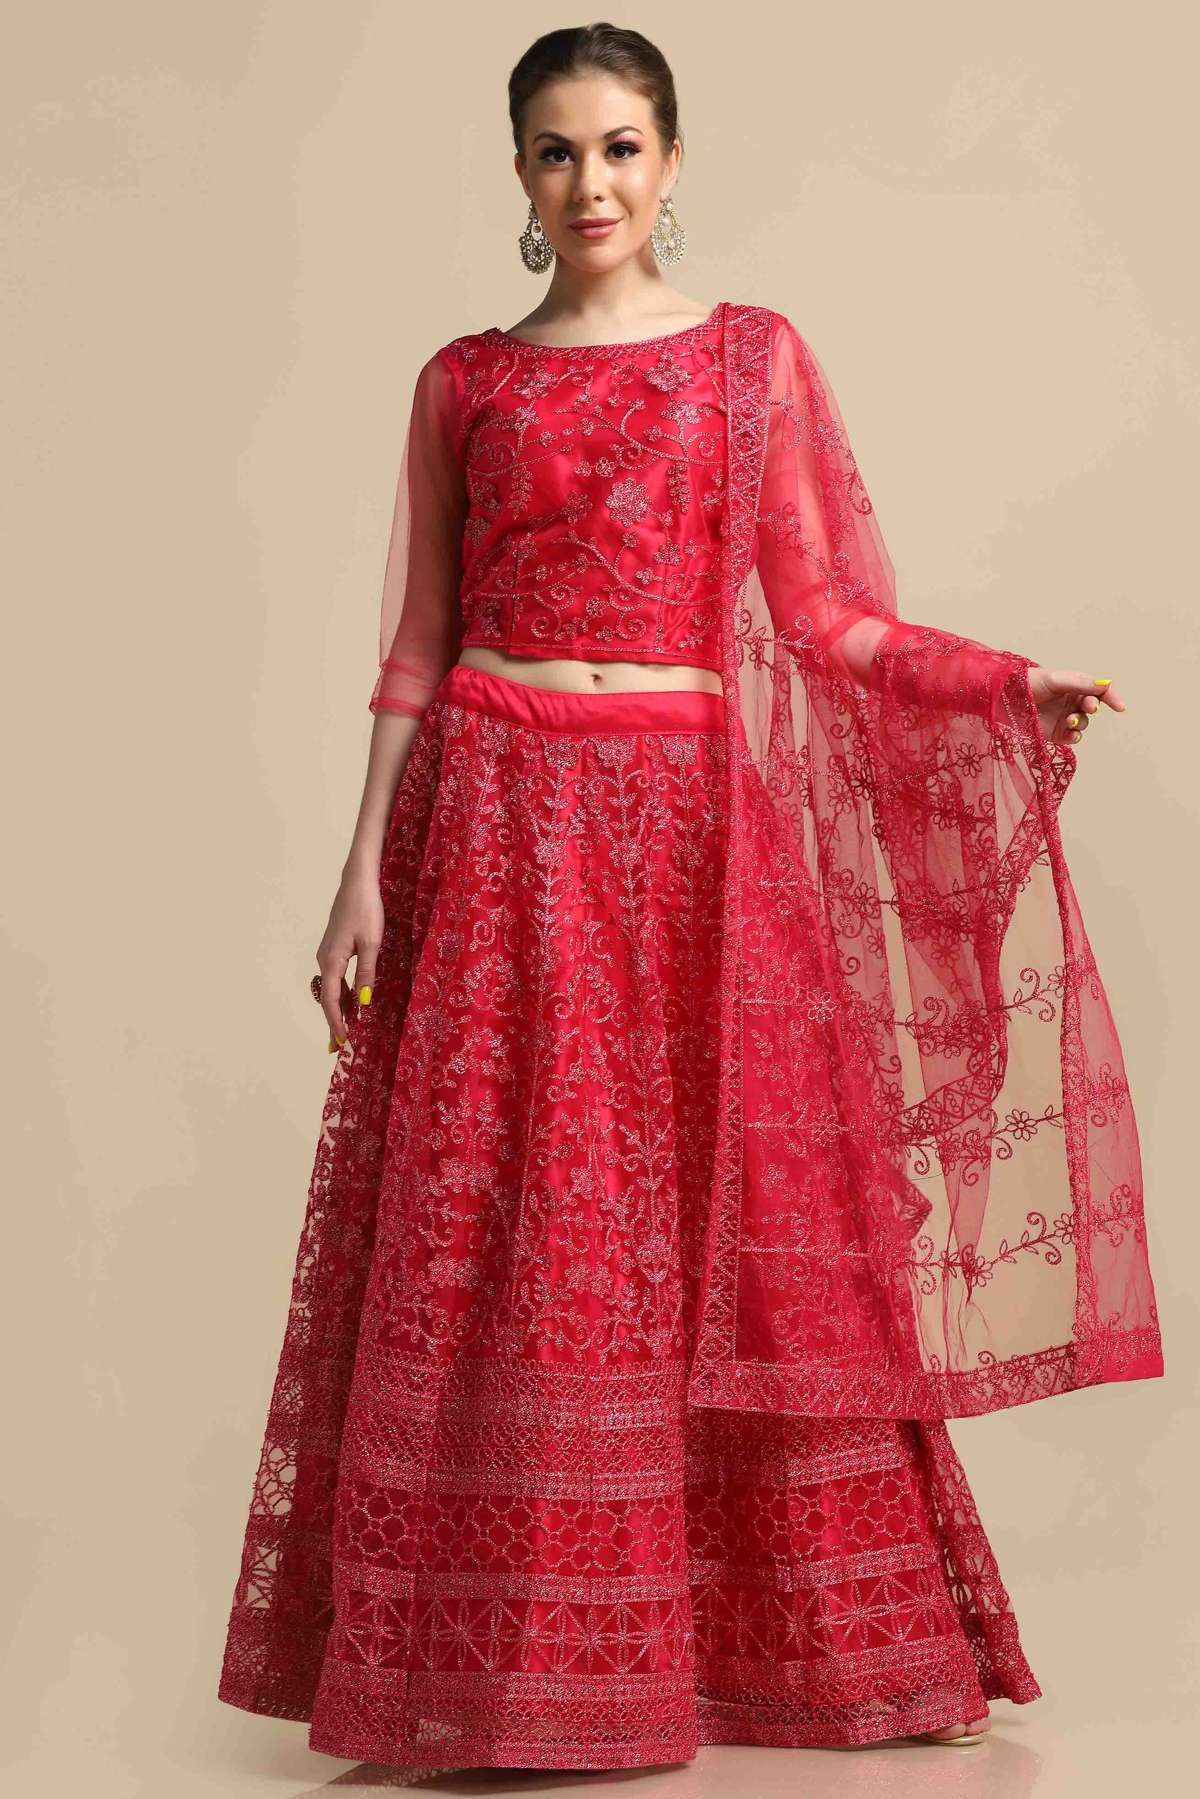 Net Embroidery Lehenga Choli In Pink Colour - LD5680410